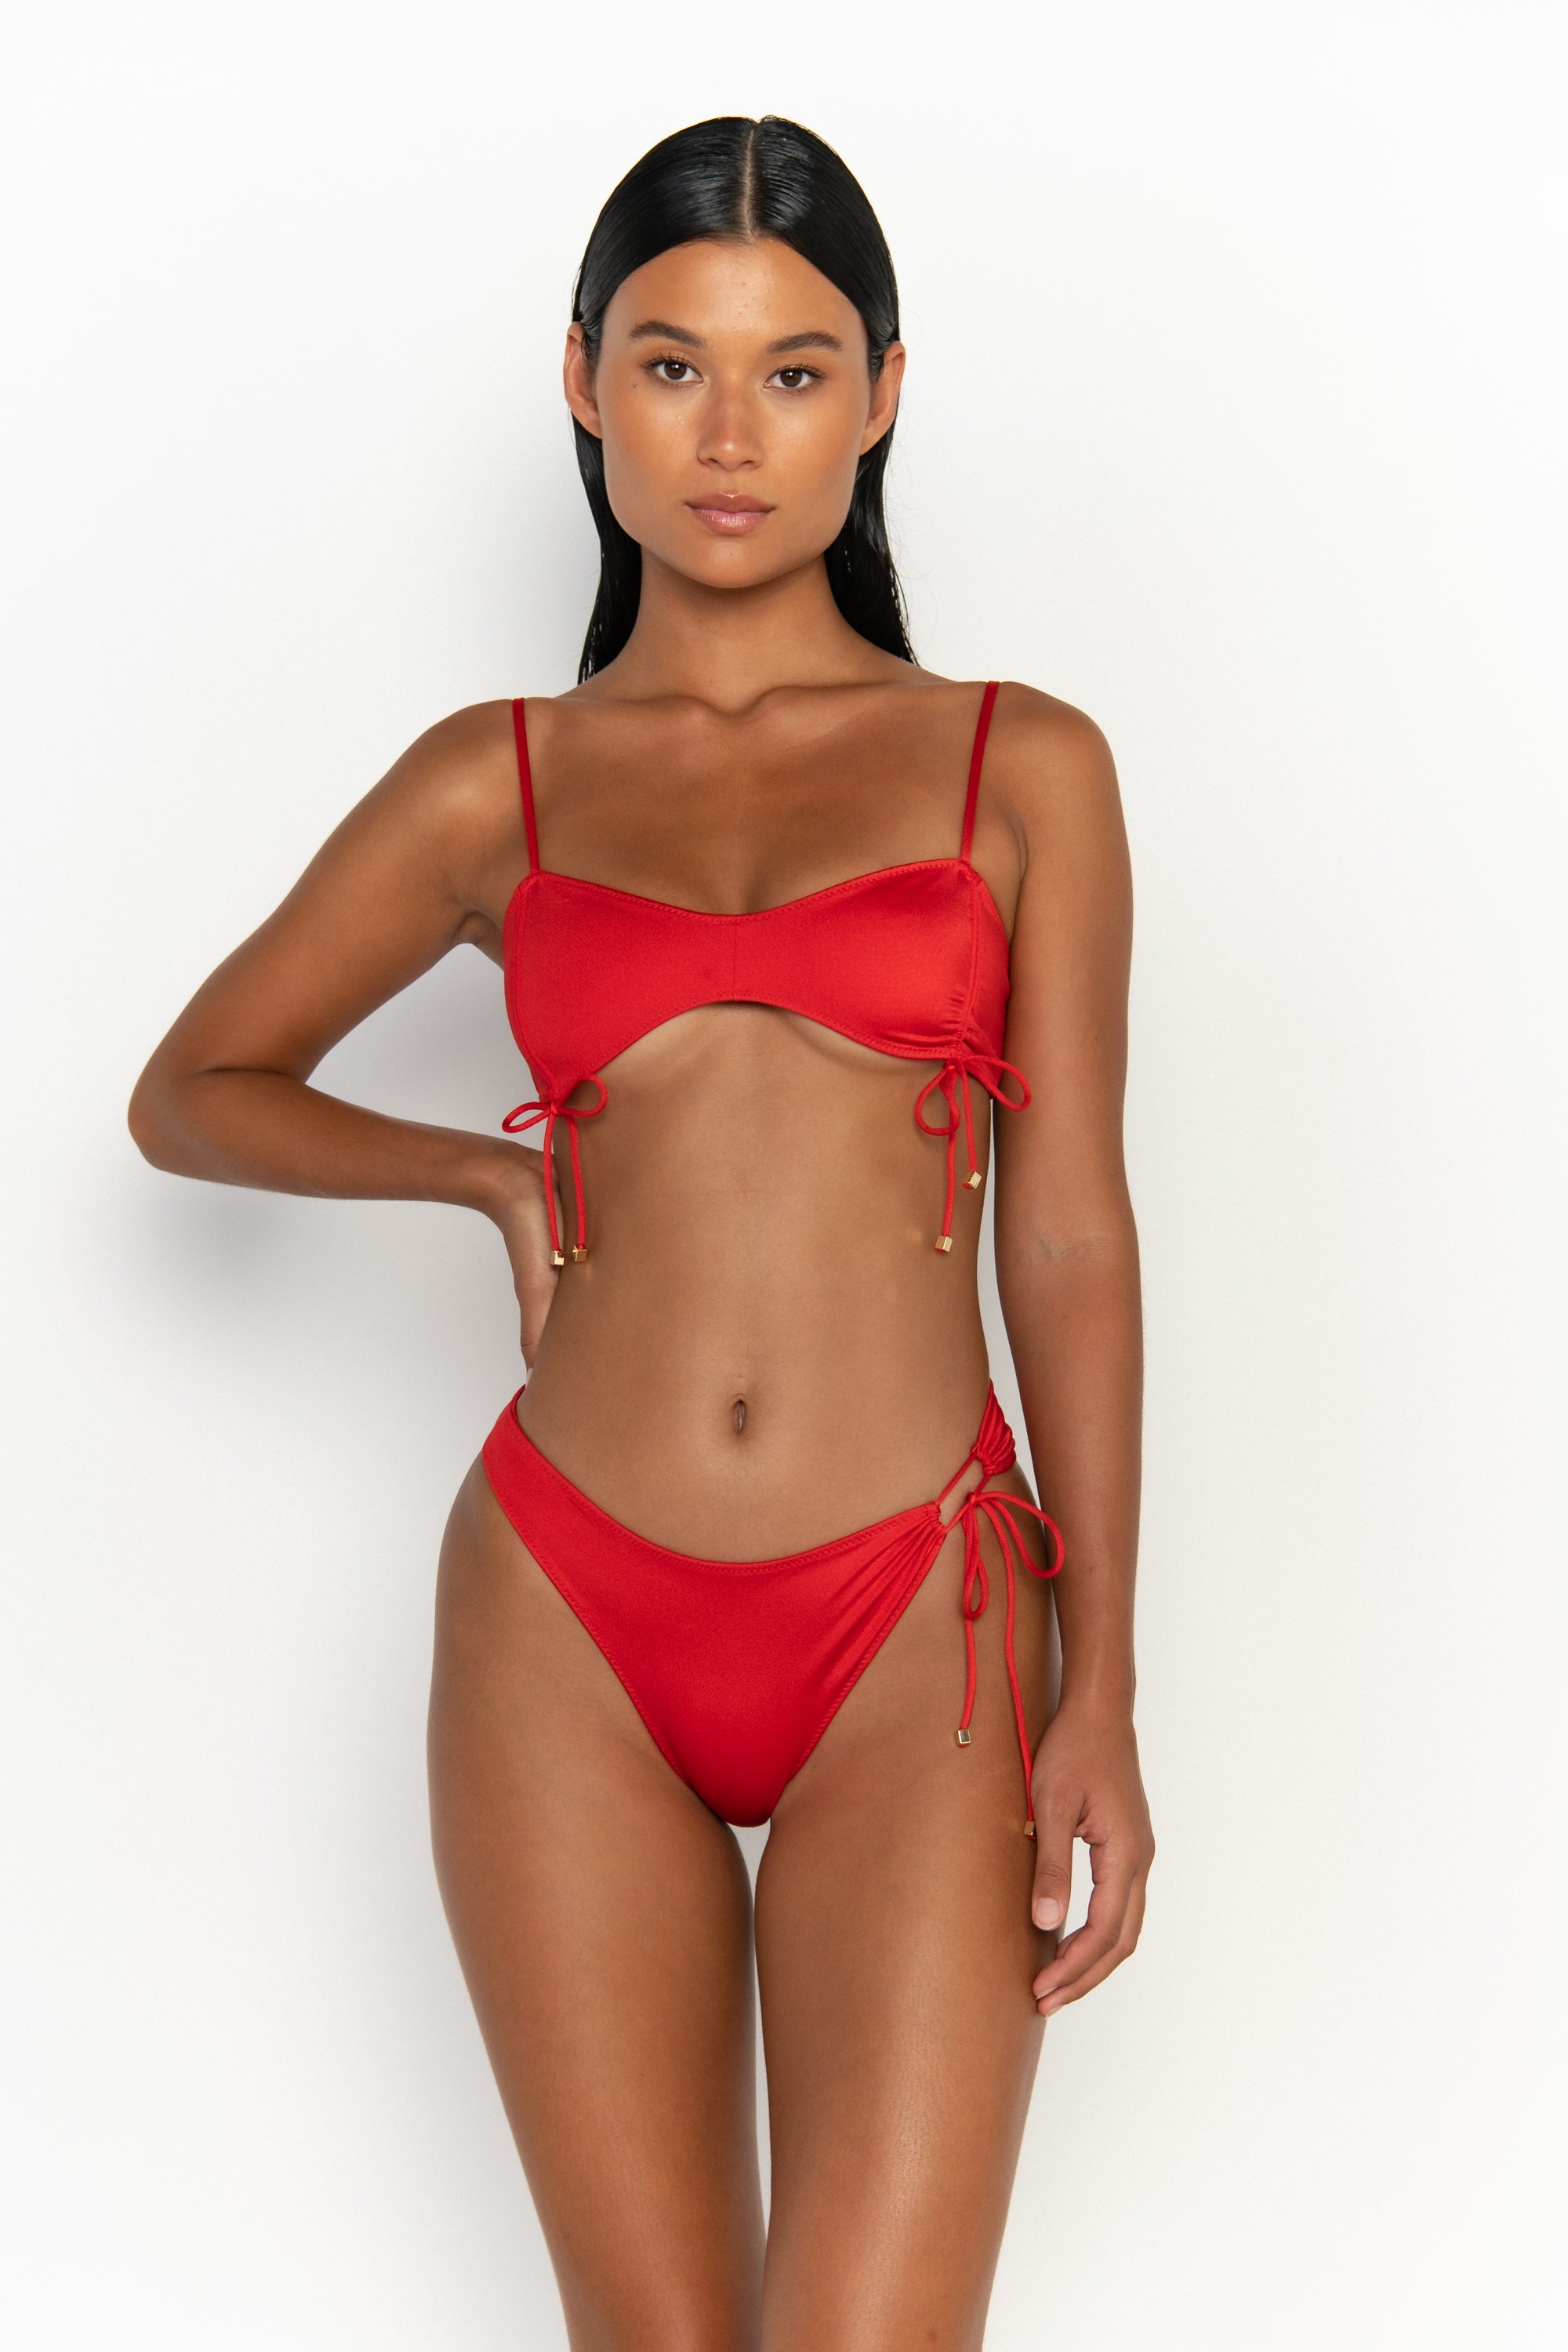 front view womens swimwear designed as high quality bikini from sommer swim swimwear australia - bea siren is a red bikini with bralette bikini top